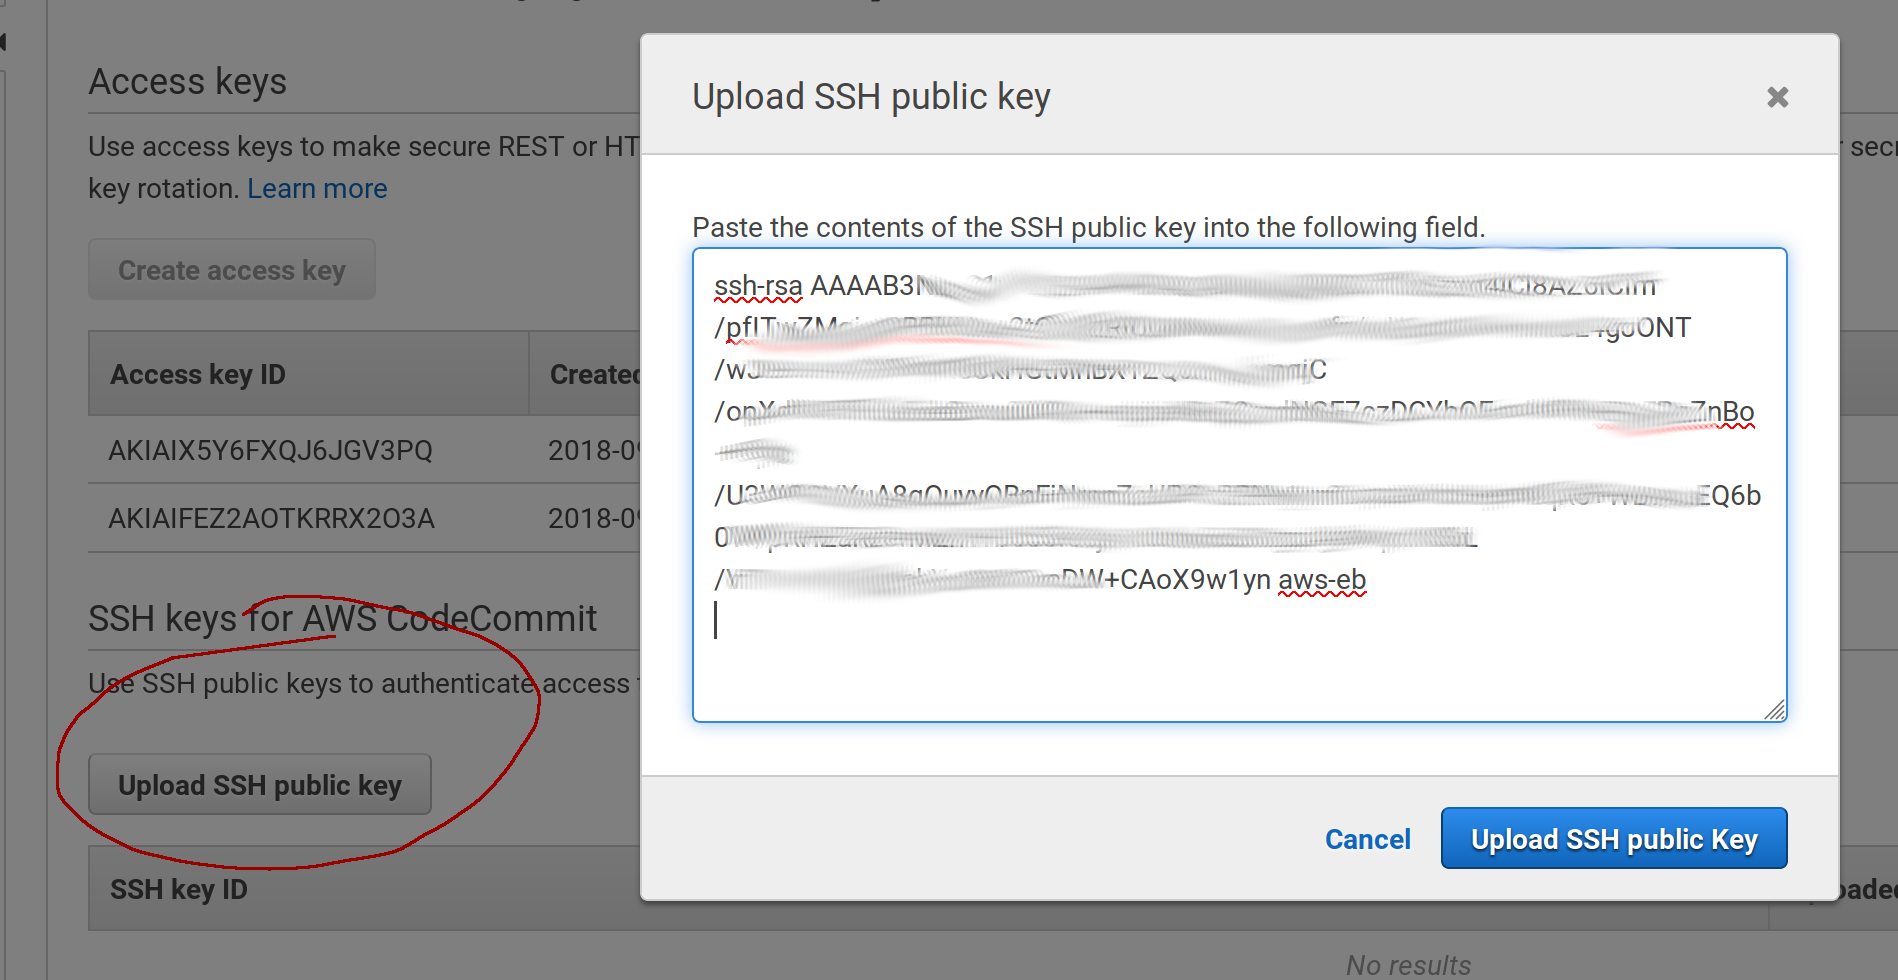 Upload SSH public key